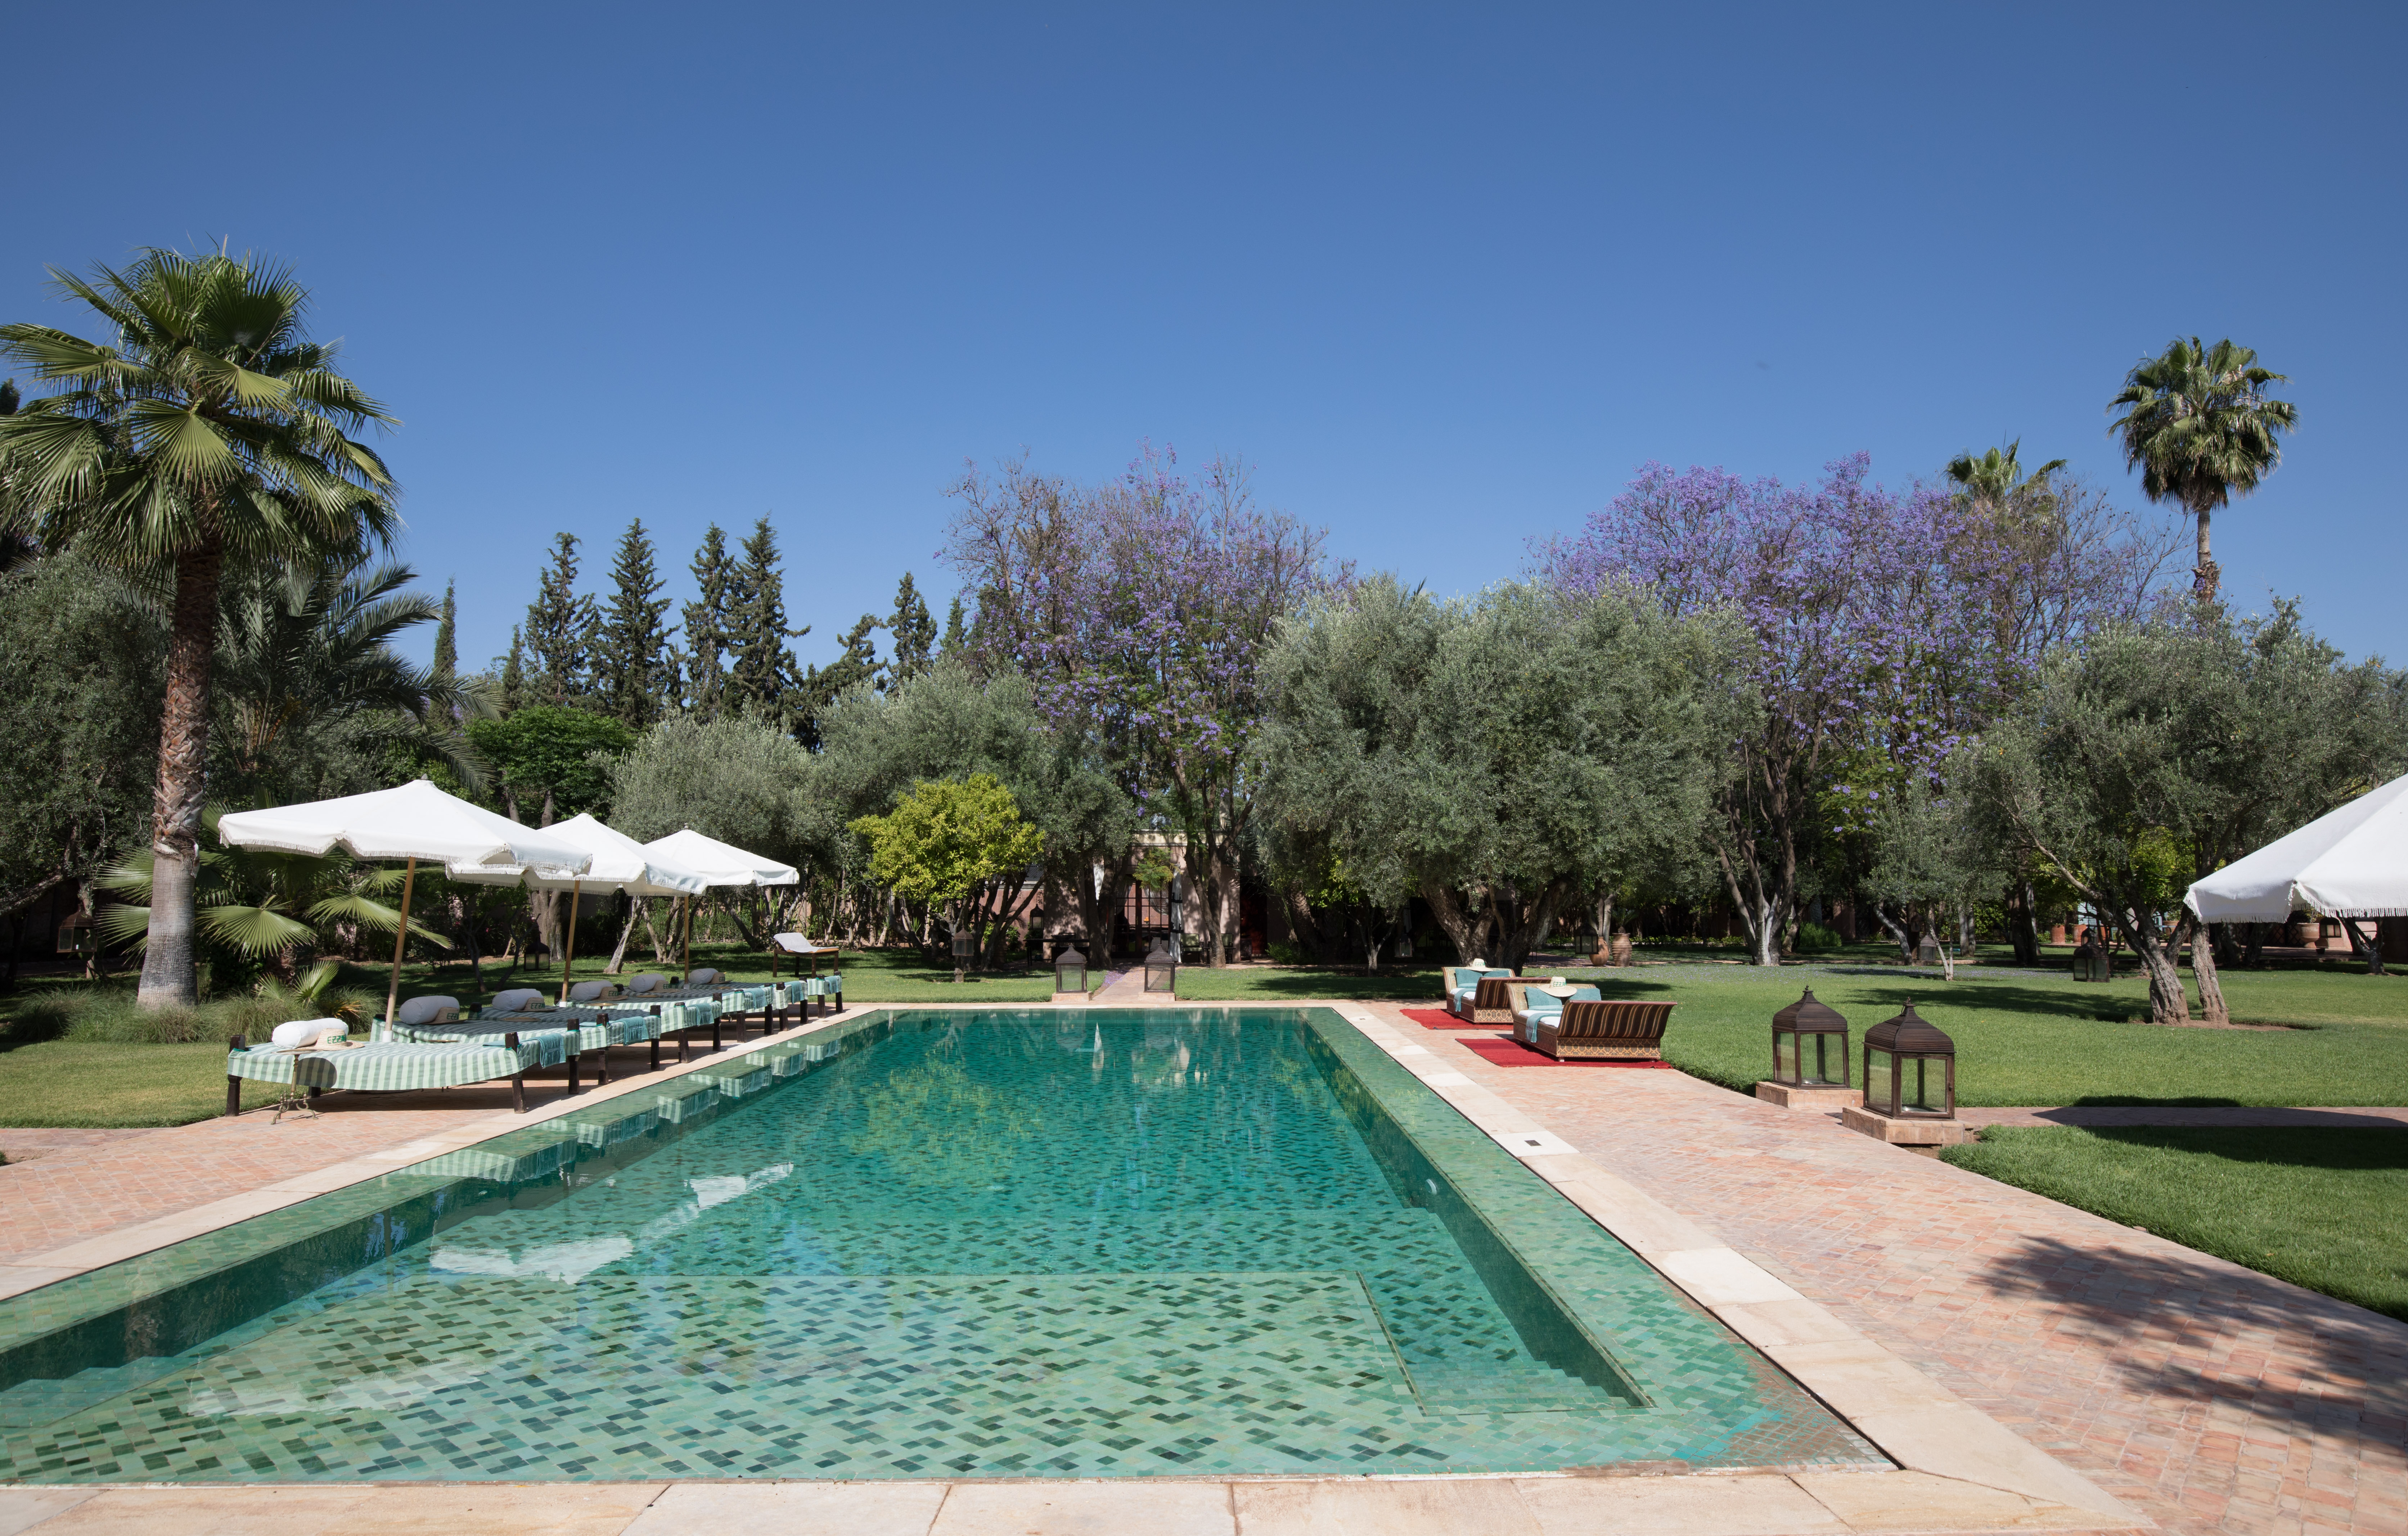 The swimming pool at Villa Ezzahra